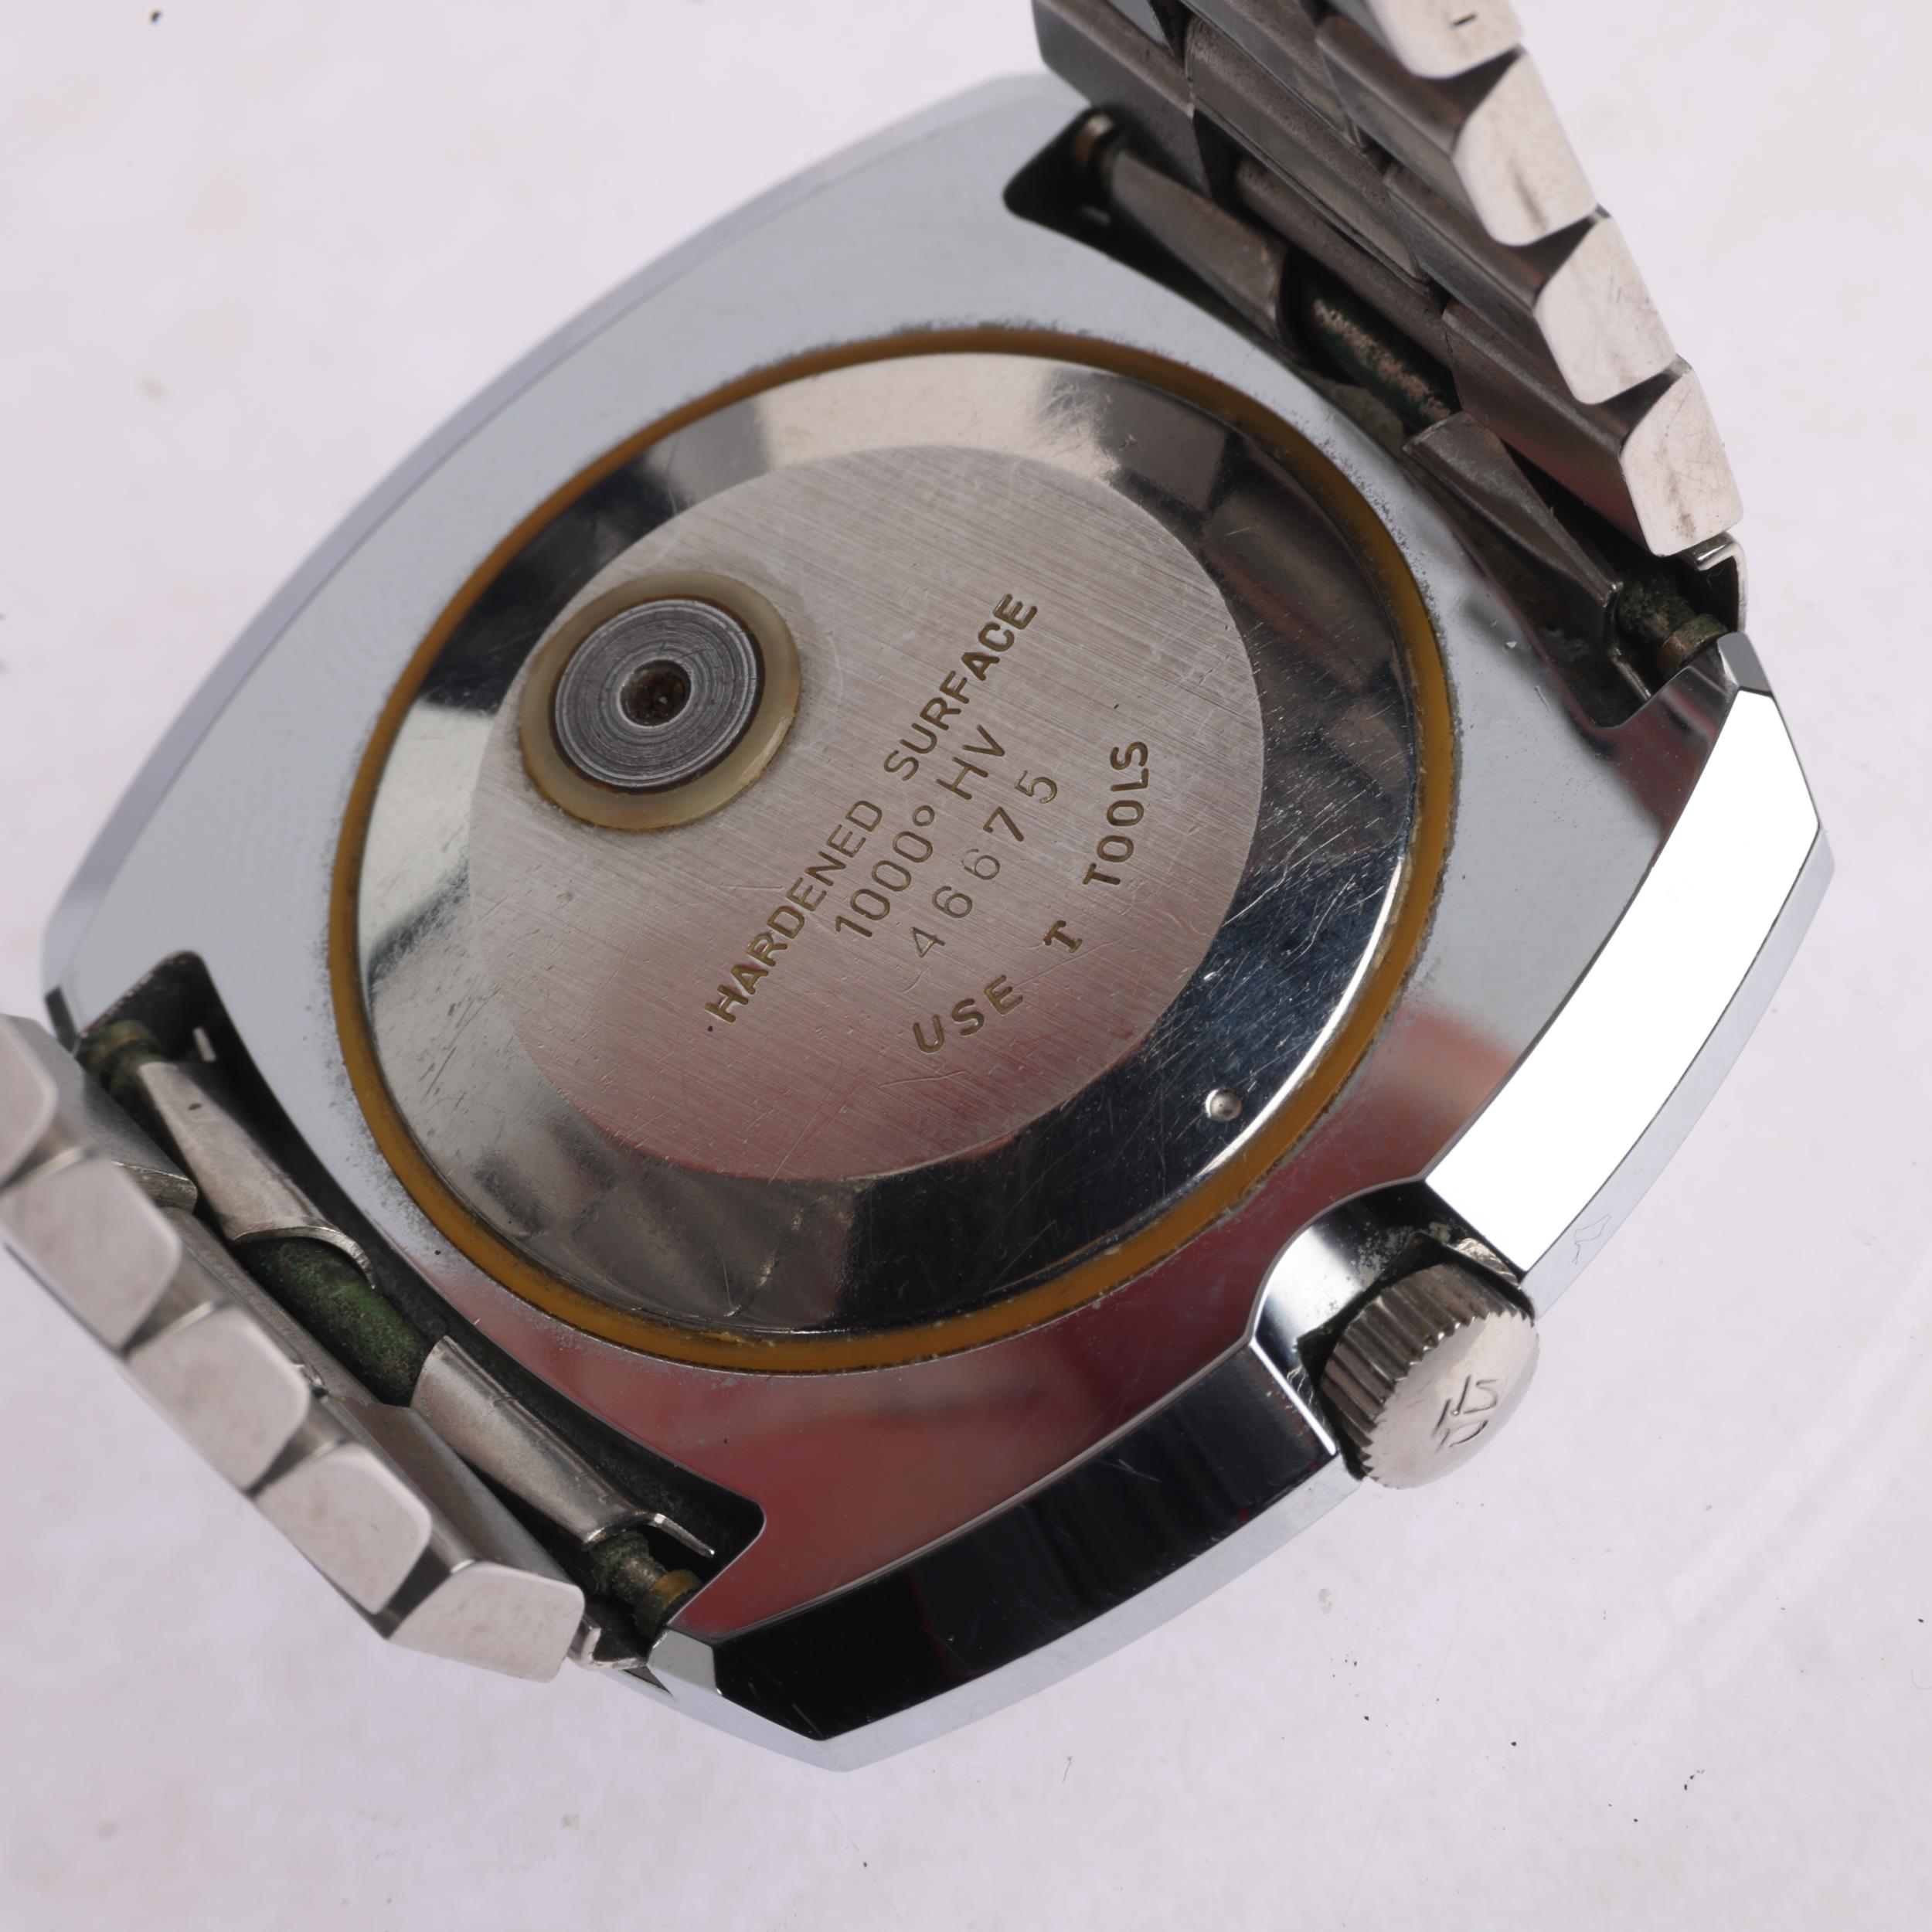 TISSOT - a Vintage stainless steel PR-518 automatic calendar bracelet watch, circa 1970s, ombre blue - Image 4 of 5